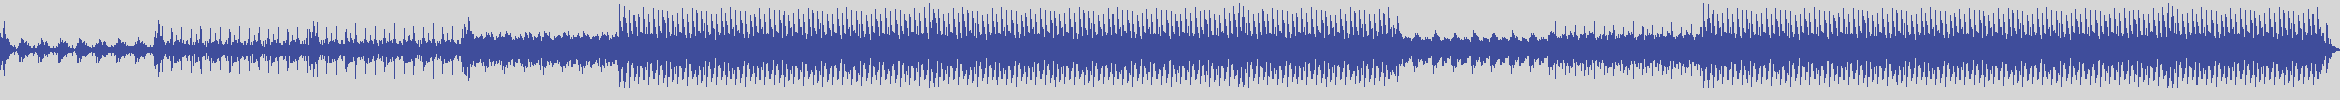 nf_boyz_records [NFY035] X Times - Responsible [Fresh & Tonique House Mix] audio wave form